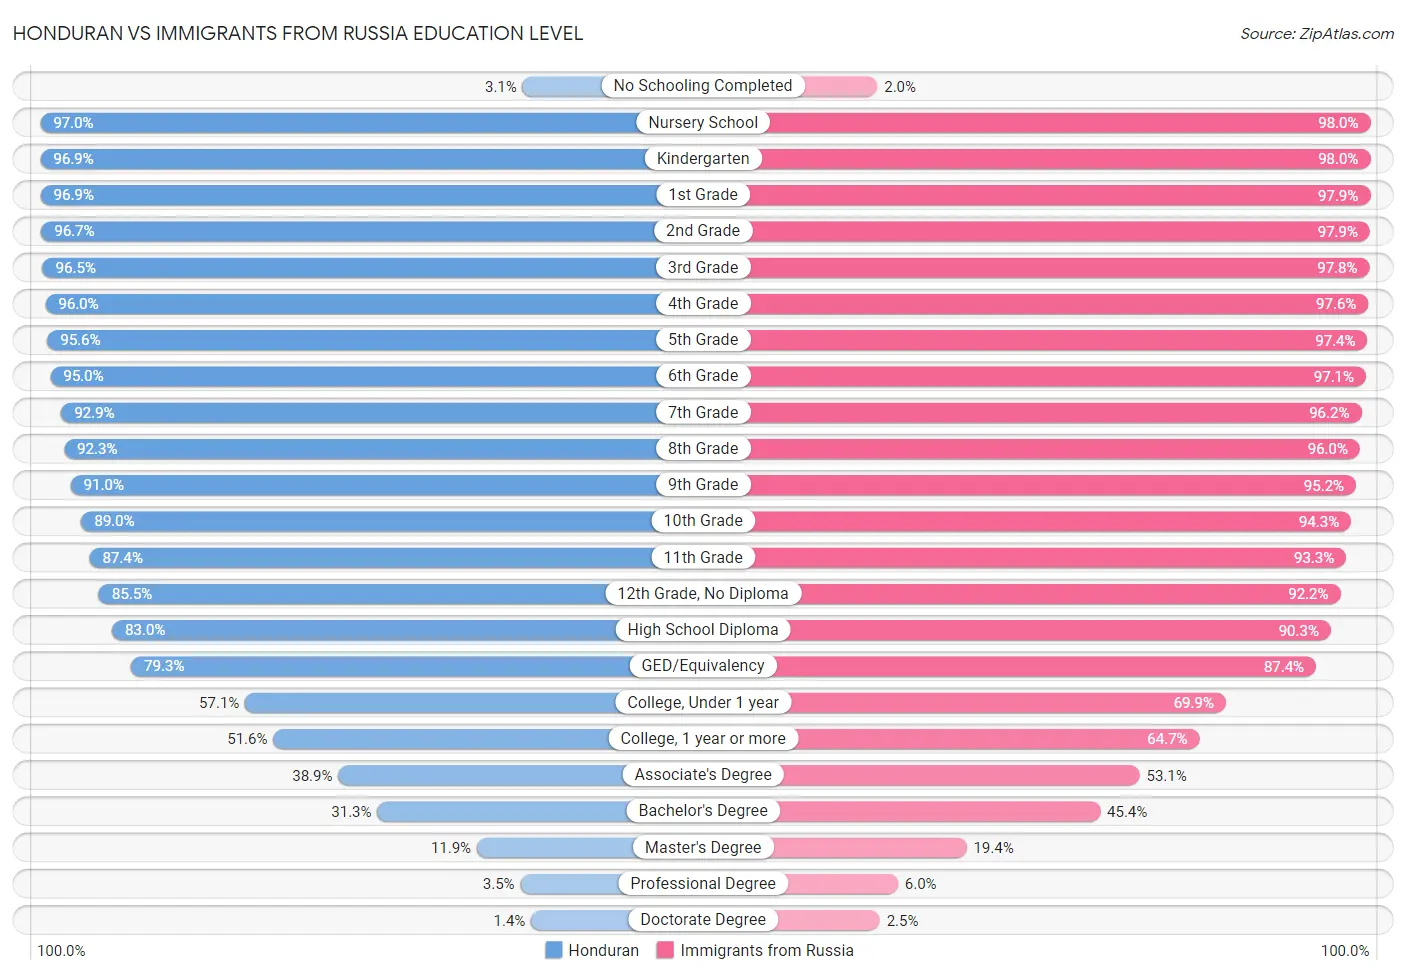 Honduran vs Immigrants from Russia Education Level